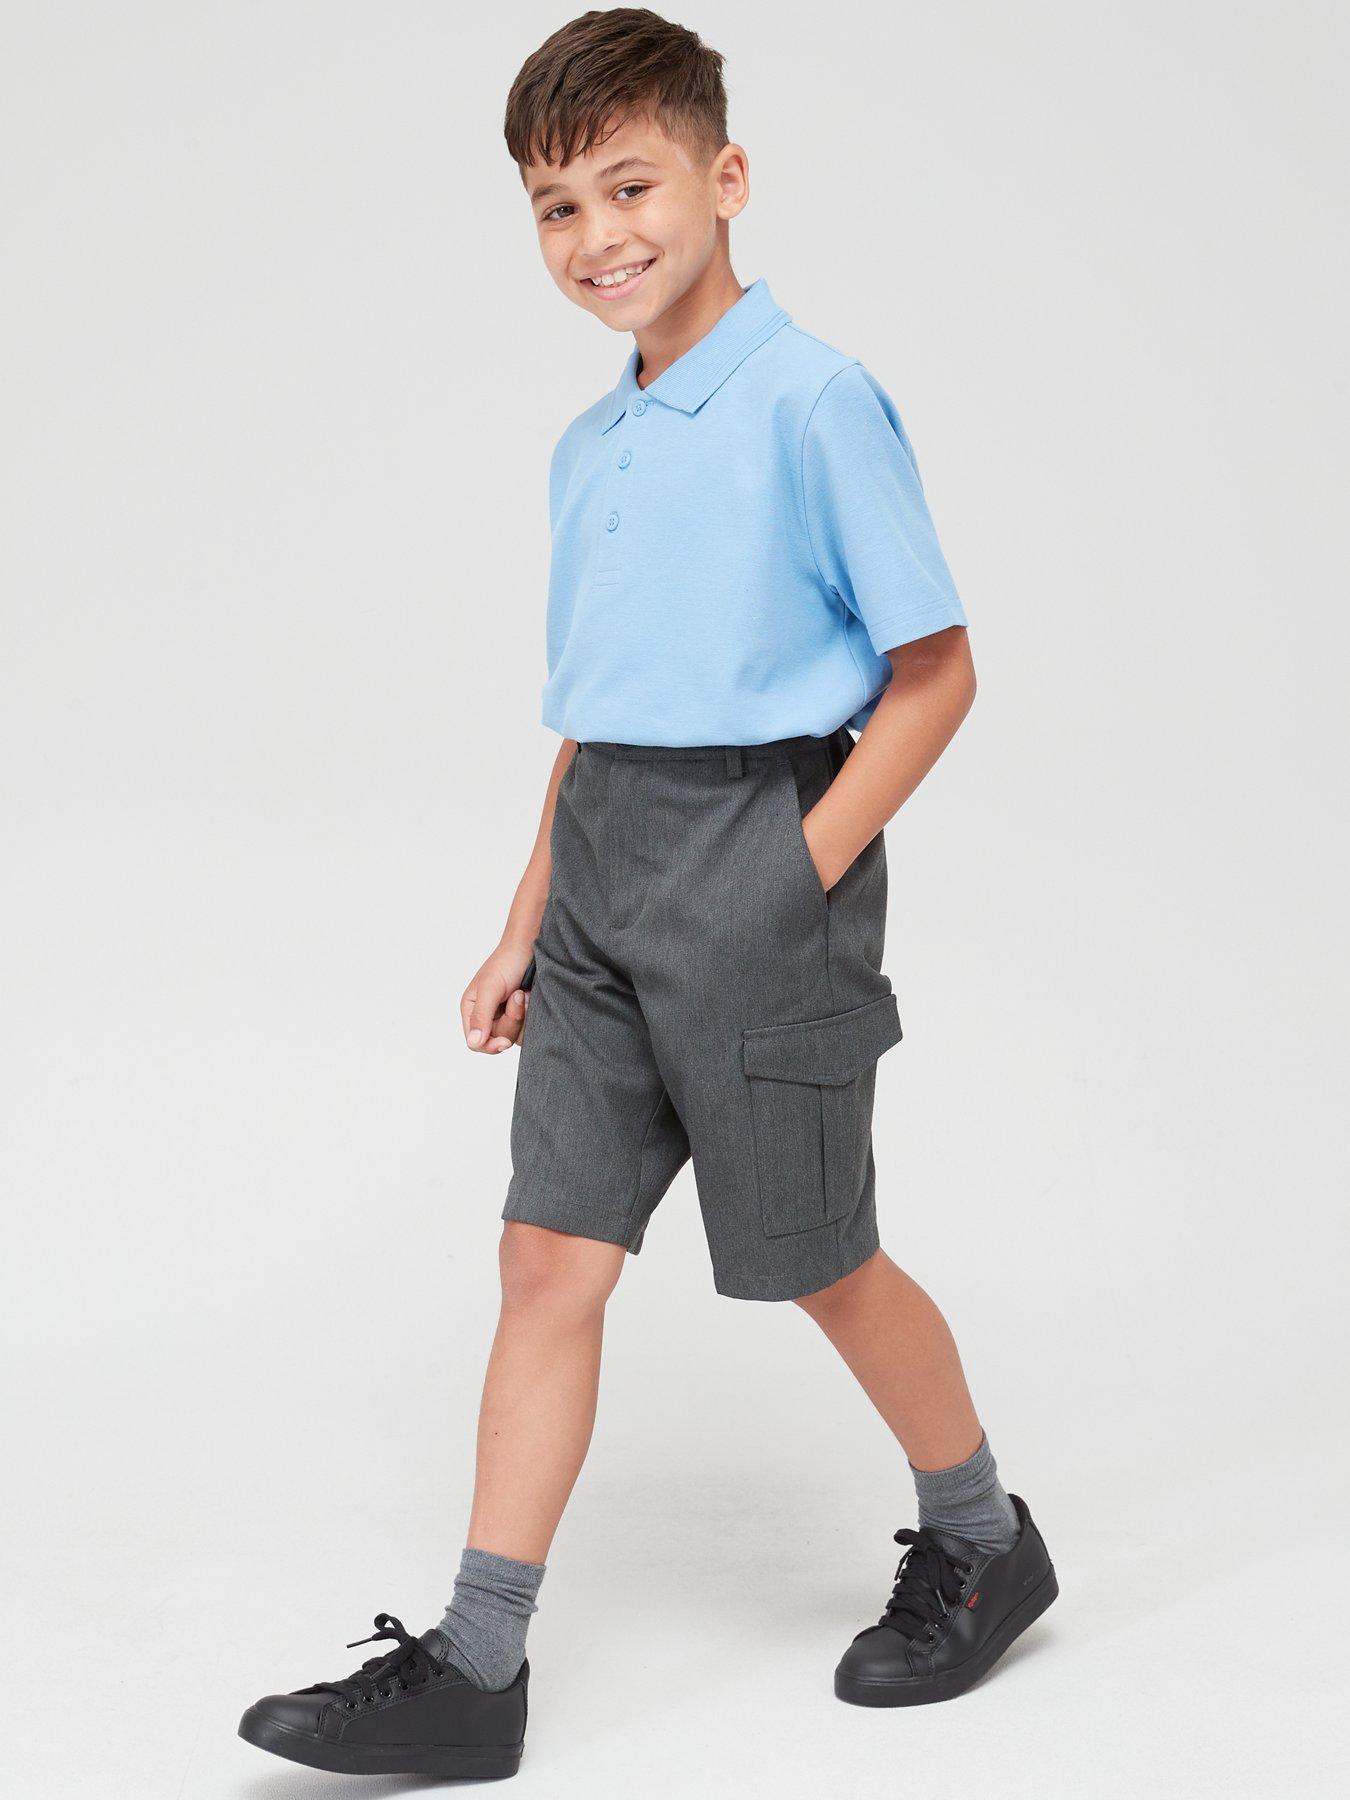 Boys School Shorts Pull Up Pull On Elastic Black Grey Age 3-16 Years